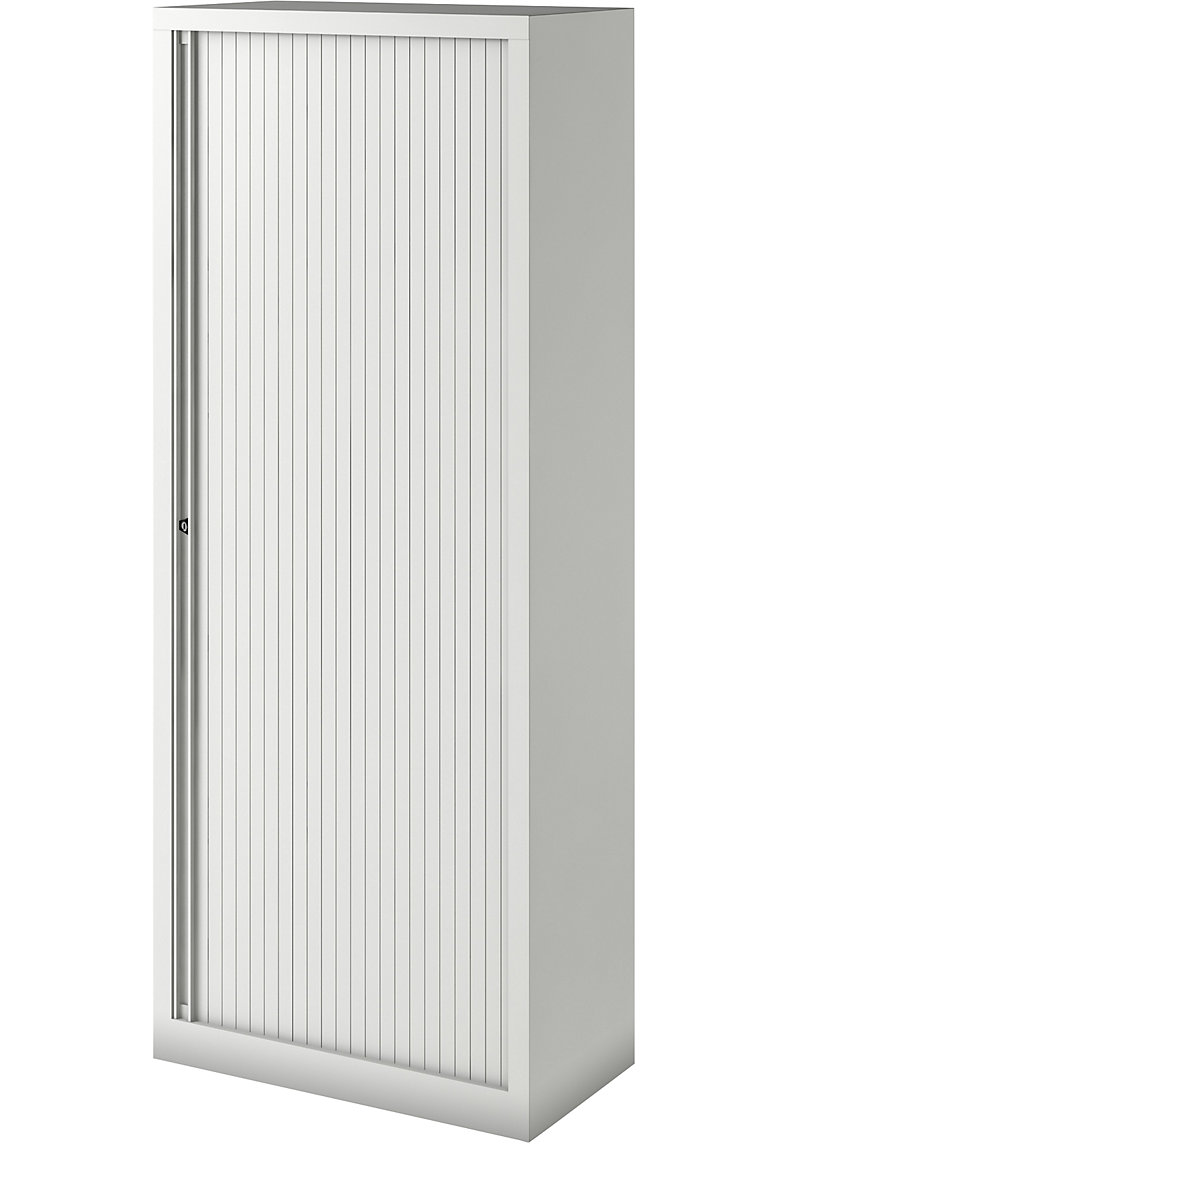 EURO roller shutter cupboard – BISLEY, width 800 mm, 4 shelves, traffic white-6